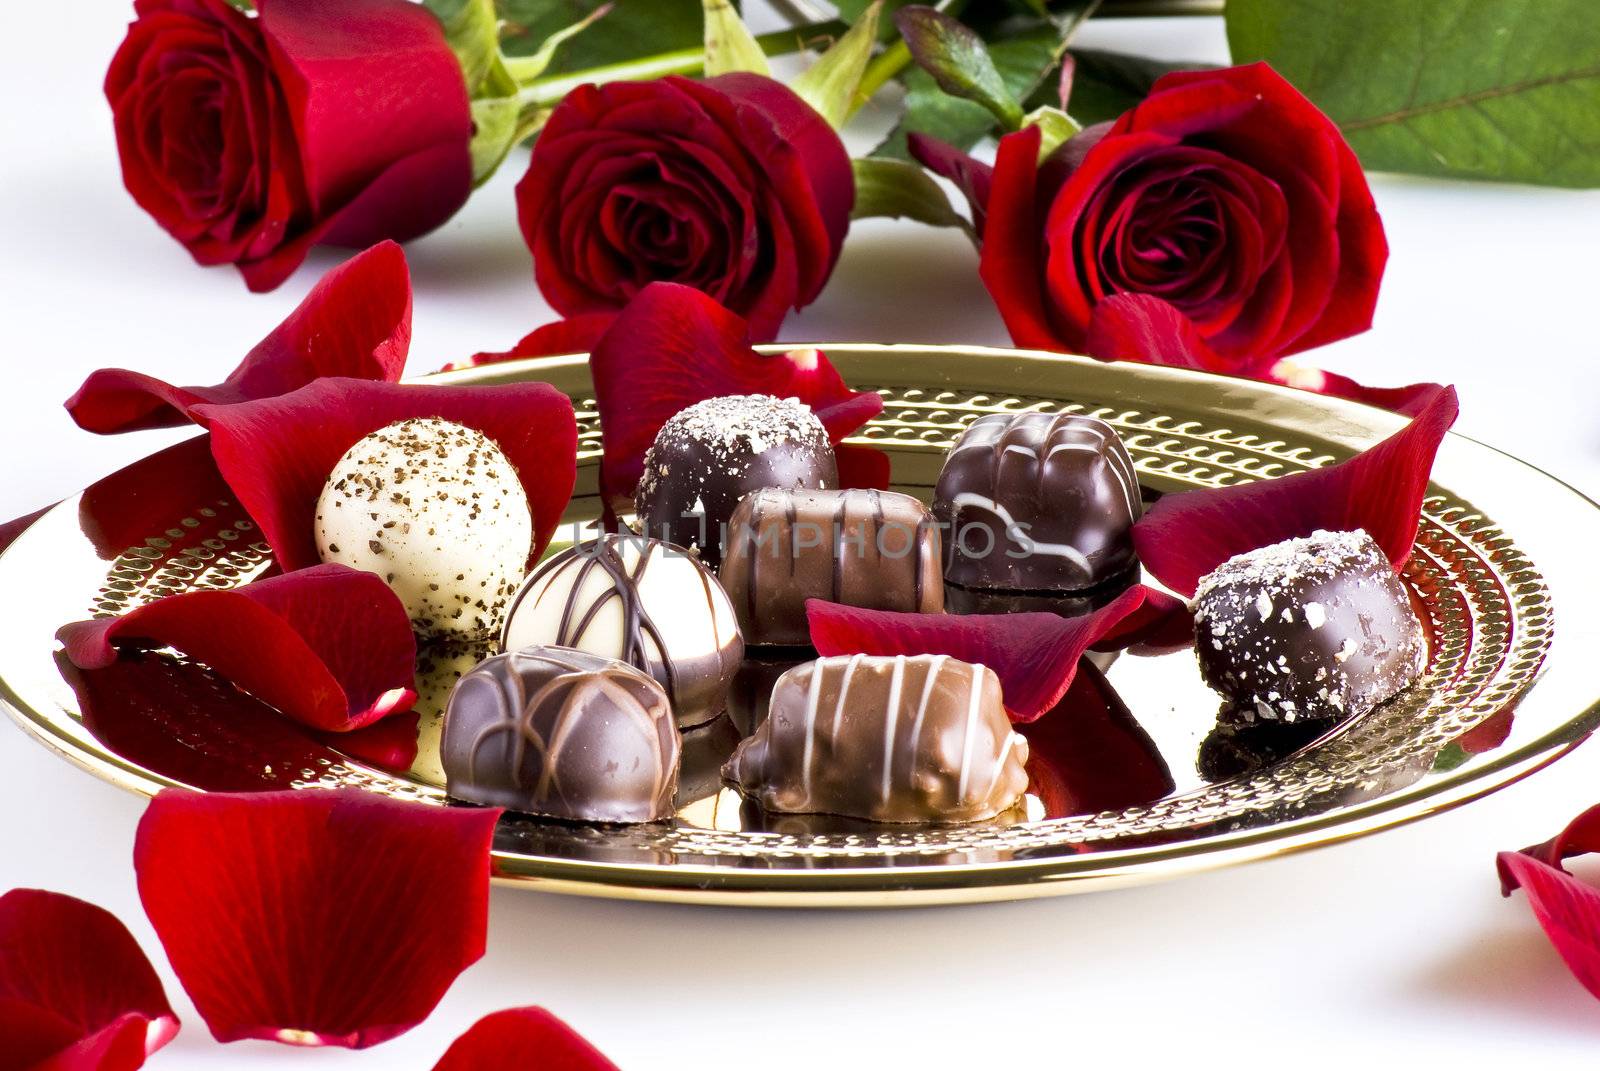 Chocolates and roses by caldix